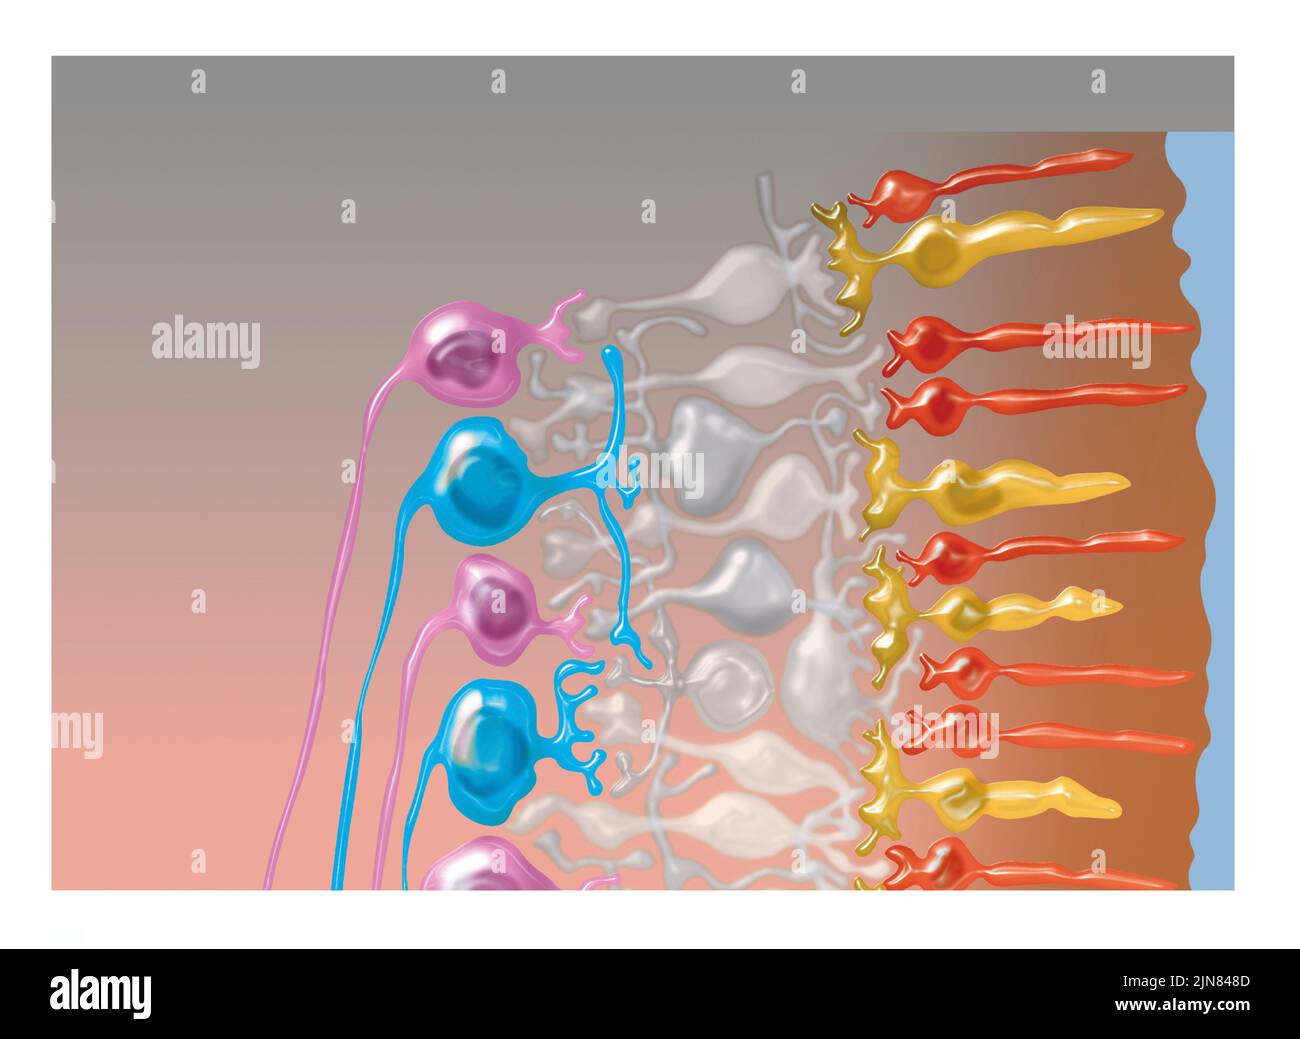 Structure of the retina, illustration Stock Photo - Alamy